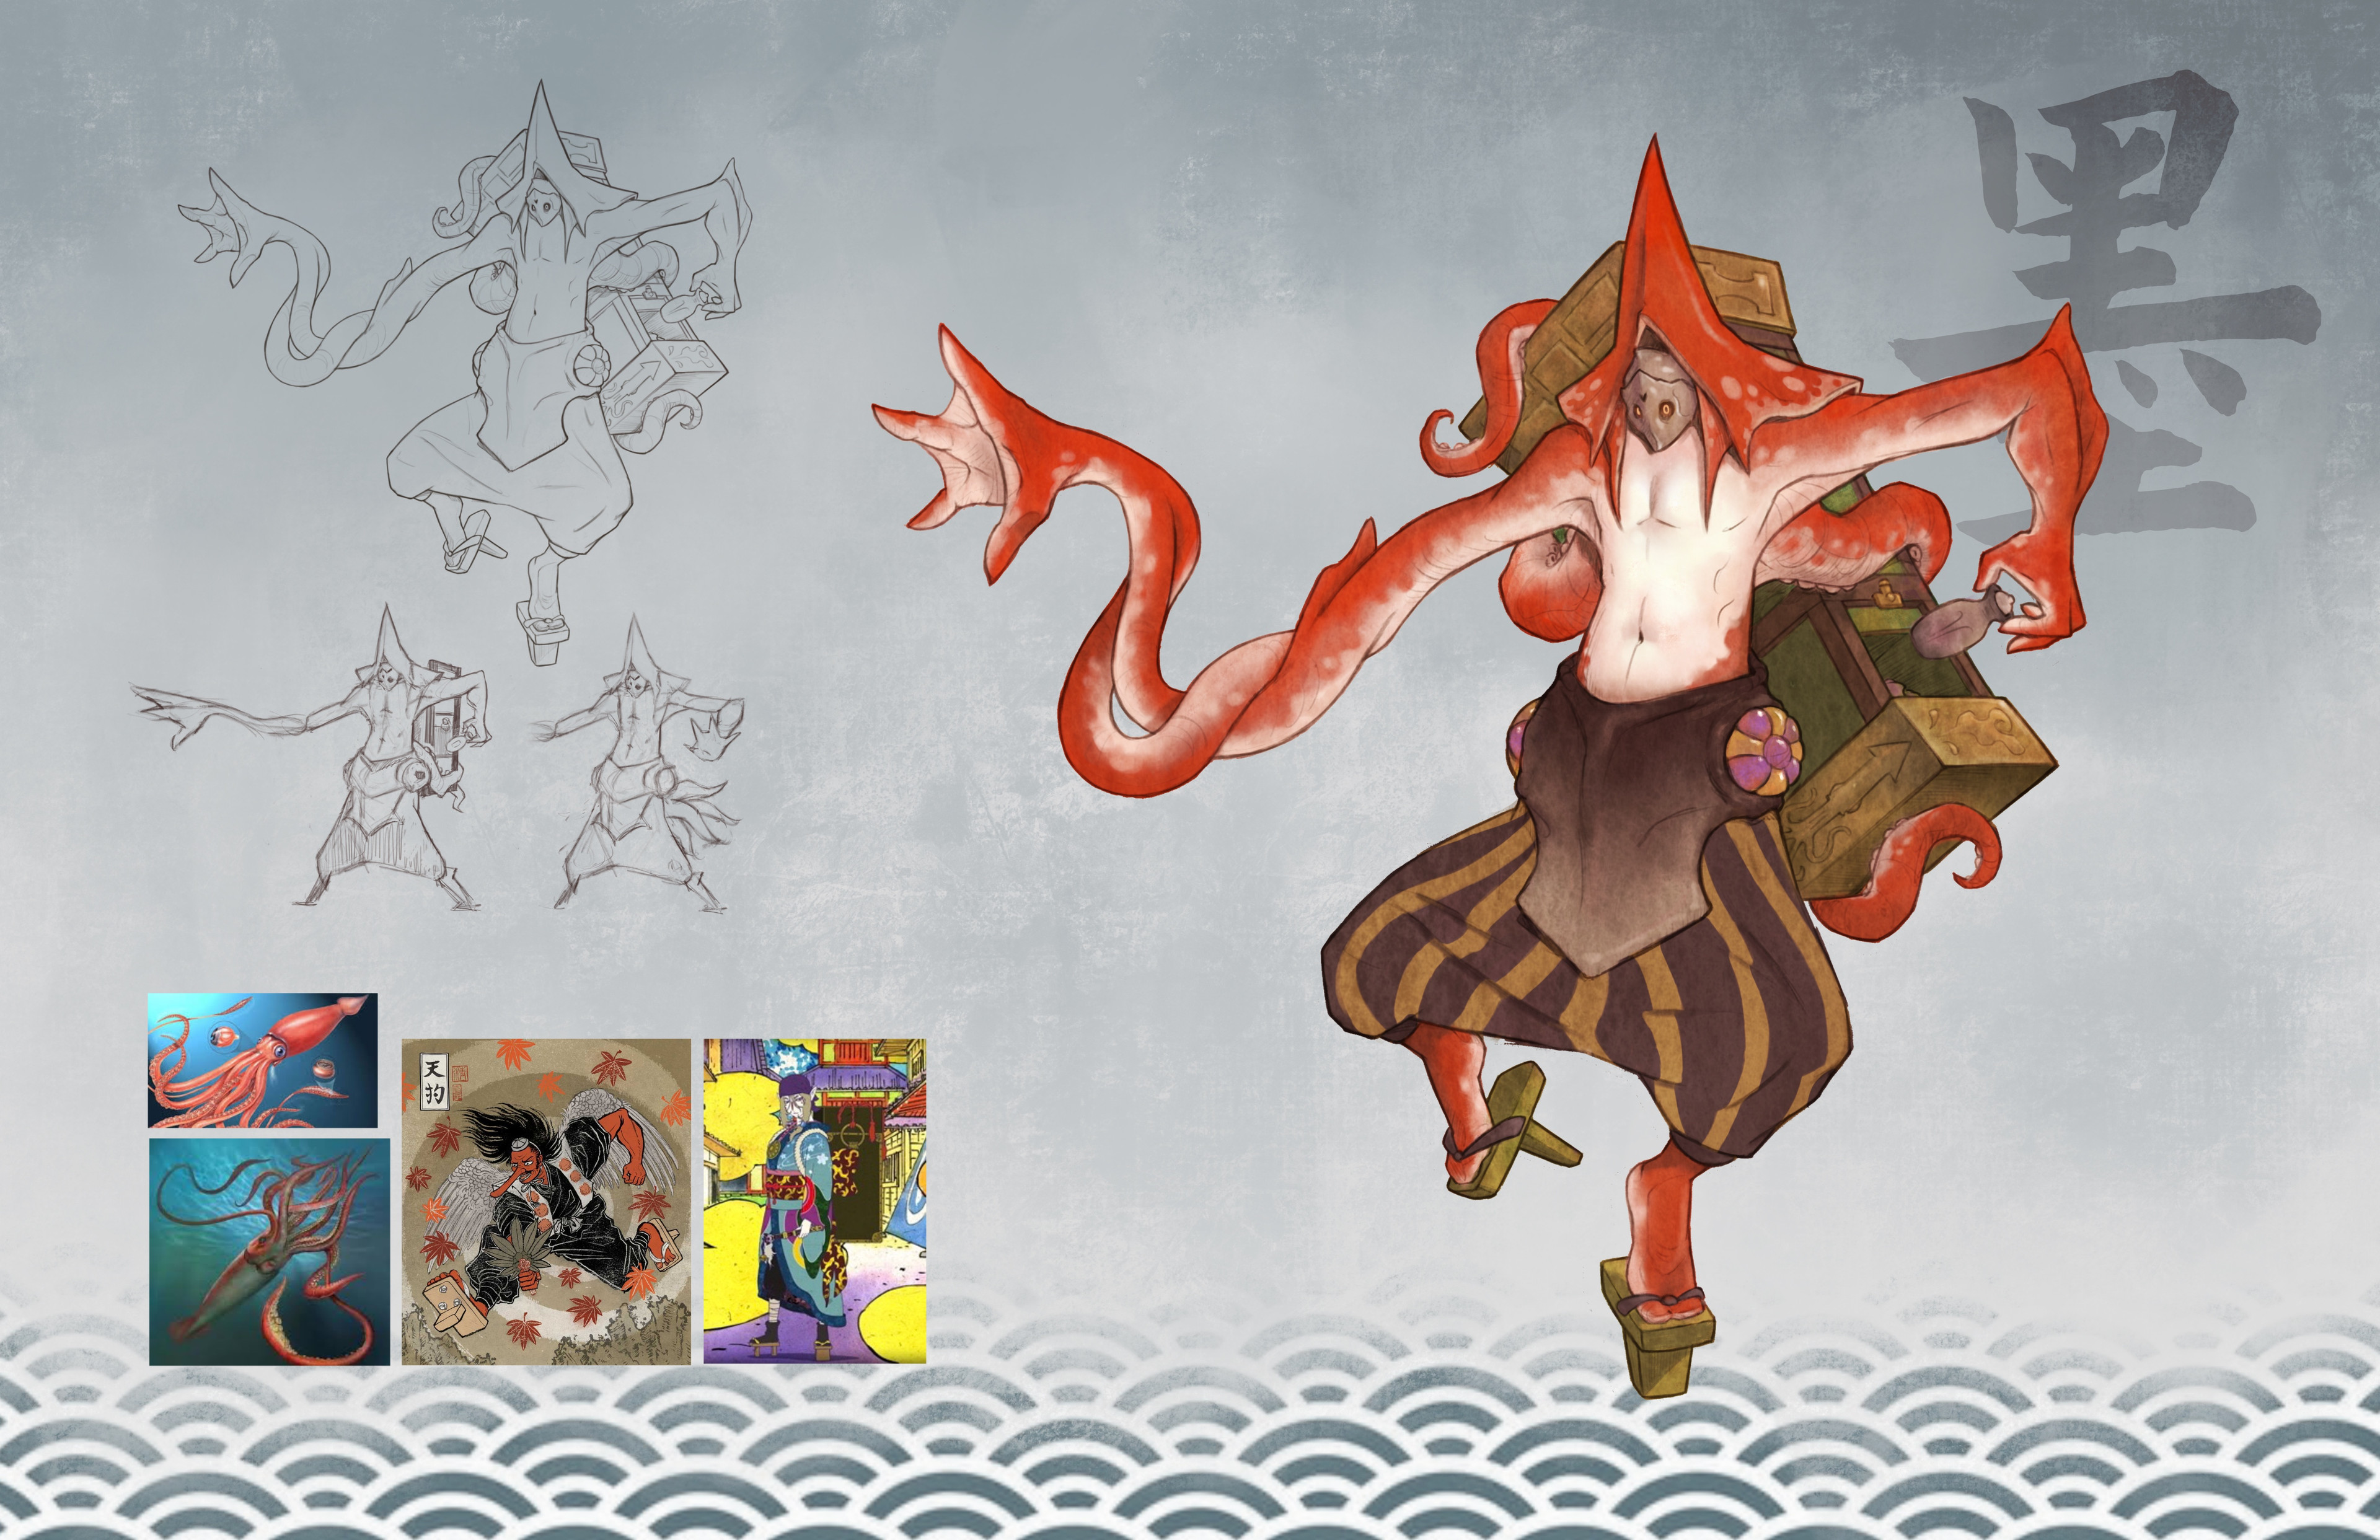 The Trickster - Design based on giant squid, the Japanese monster Tengu, and the Medicine Seller from Mononoke. The idea of his upsidedown mask is came from the upsidedown body structure of squid. 

欺诈师 - 设计源于大王乌贼、天狗、还有怪化猫里的卖药郎。因为乌贼是倒着游泳的，所以给他设计了一个倒过来的面具。